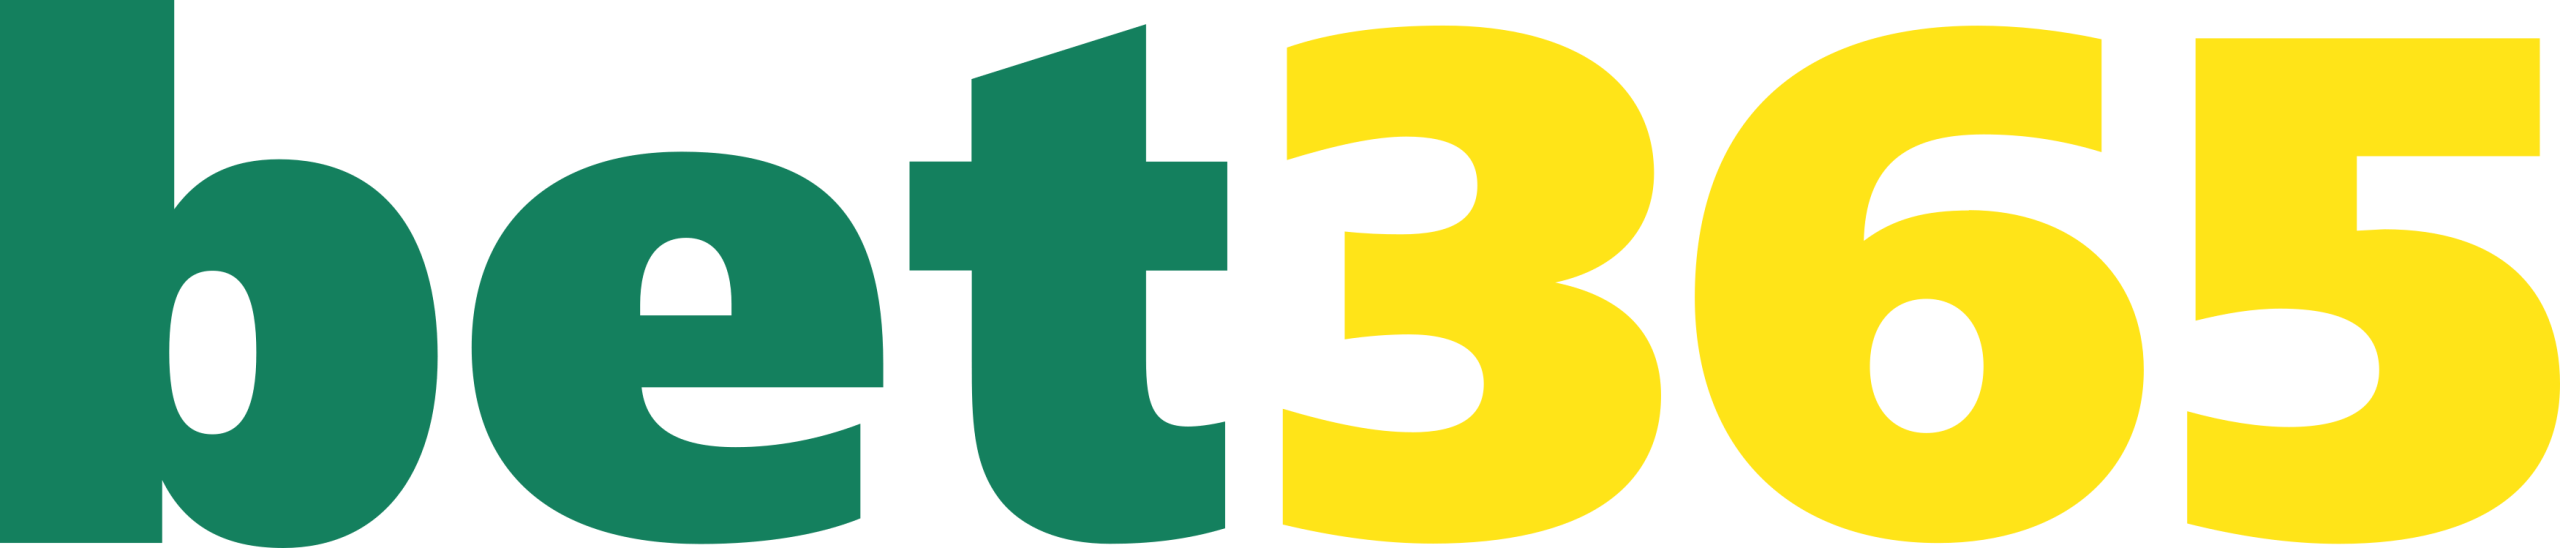 bet365-logo- (1)